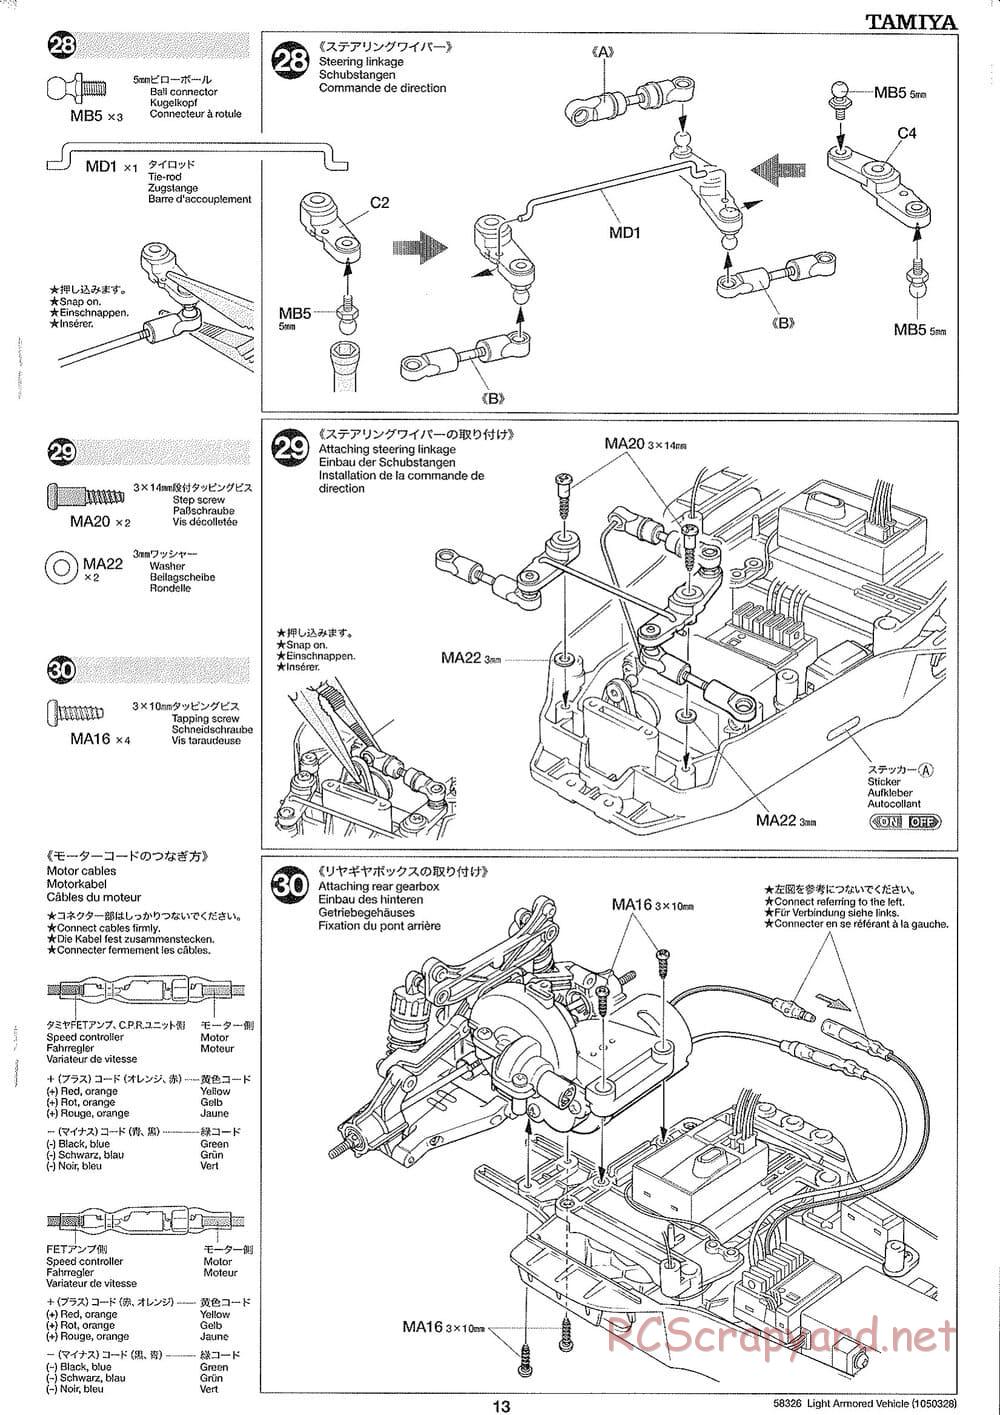 Tamiya - JGSDF Light Armored Vehicle - TA-01 Chassis - Manual - Page 13